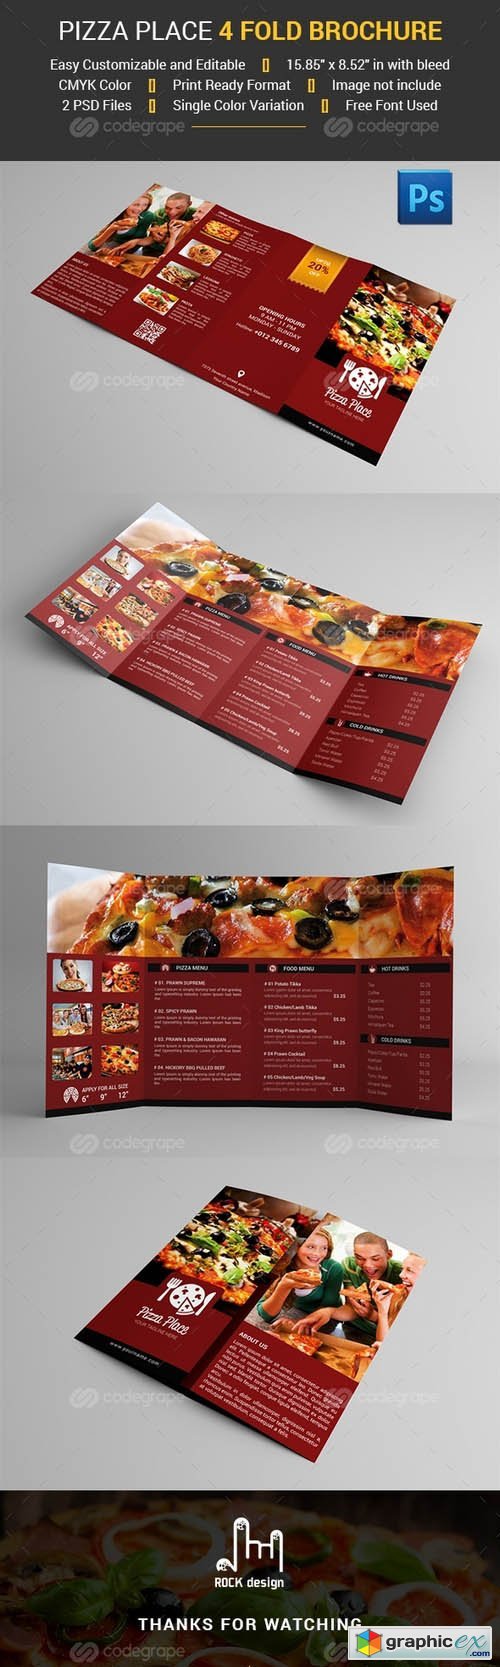 4 Fold Pizza Place Brochure 8747